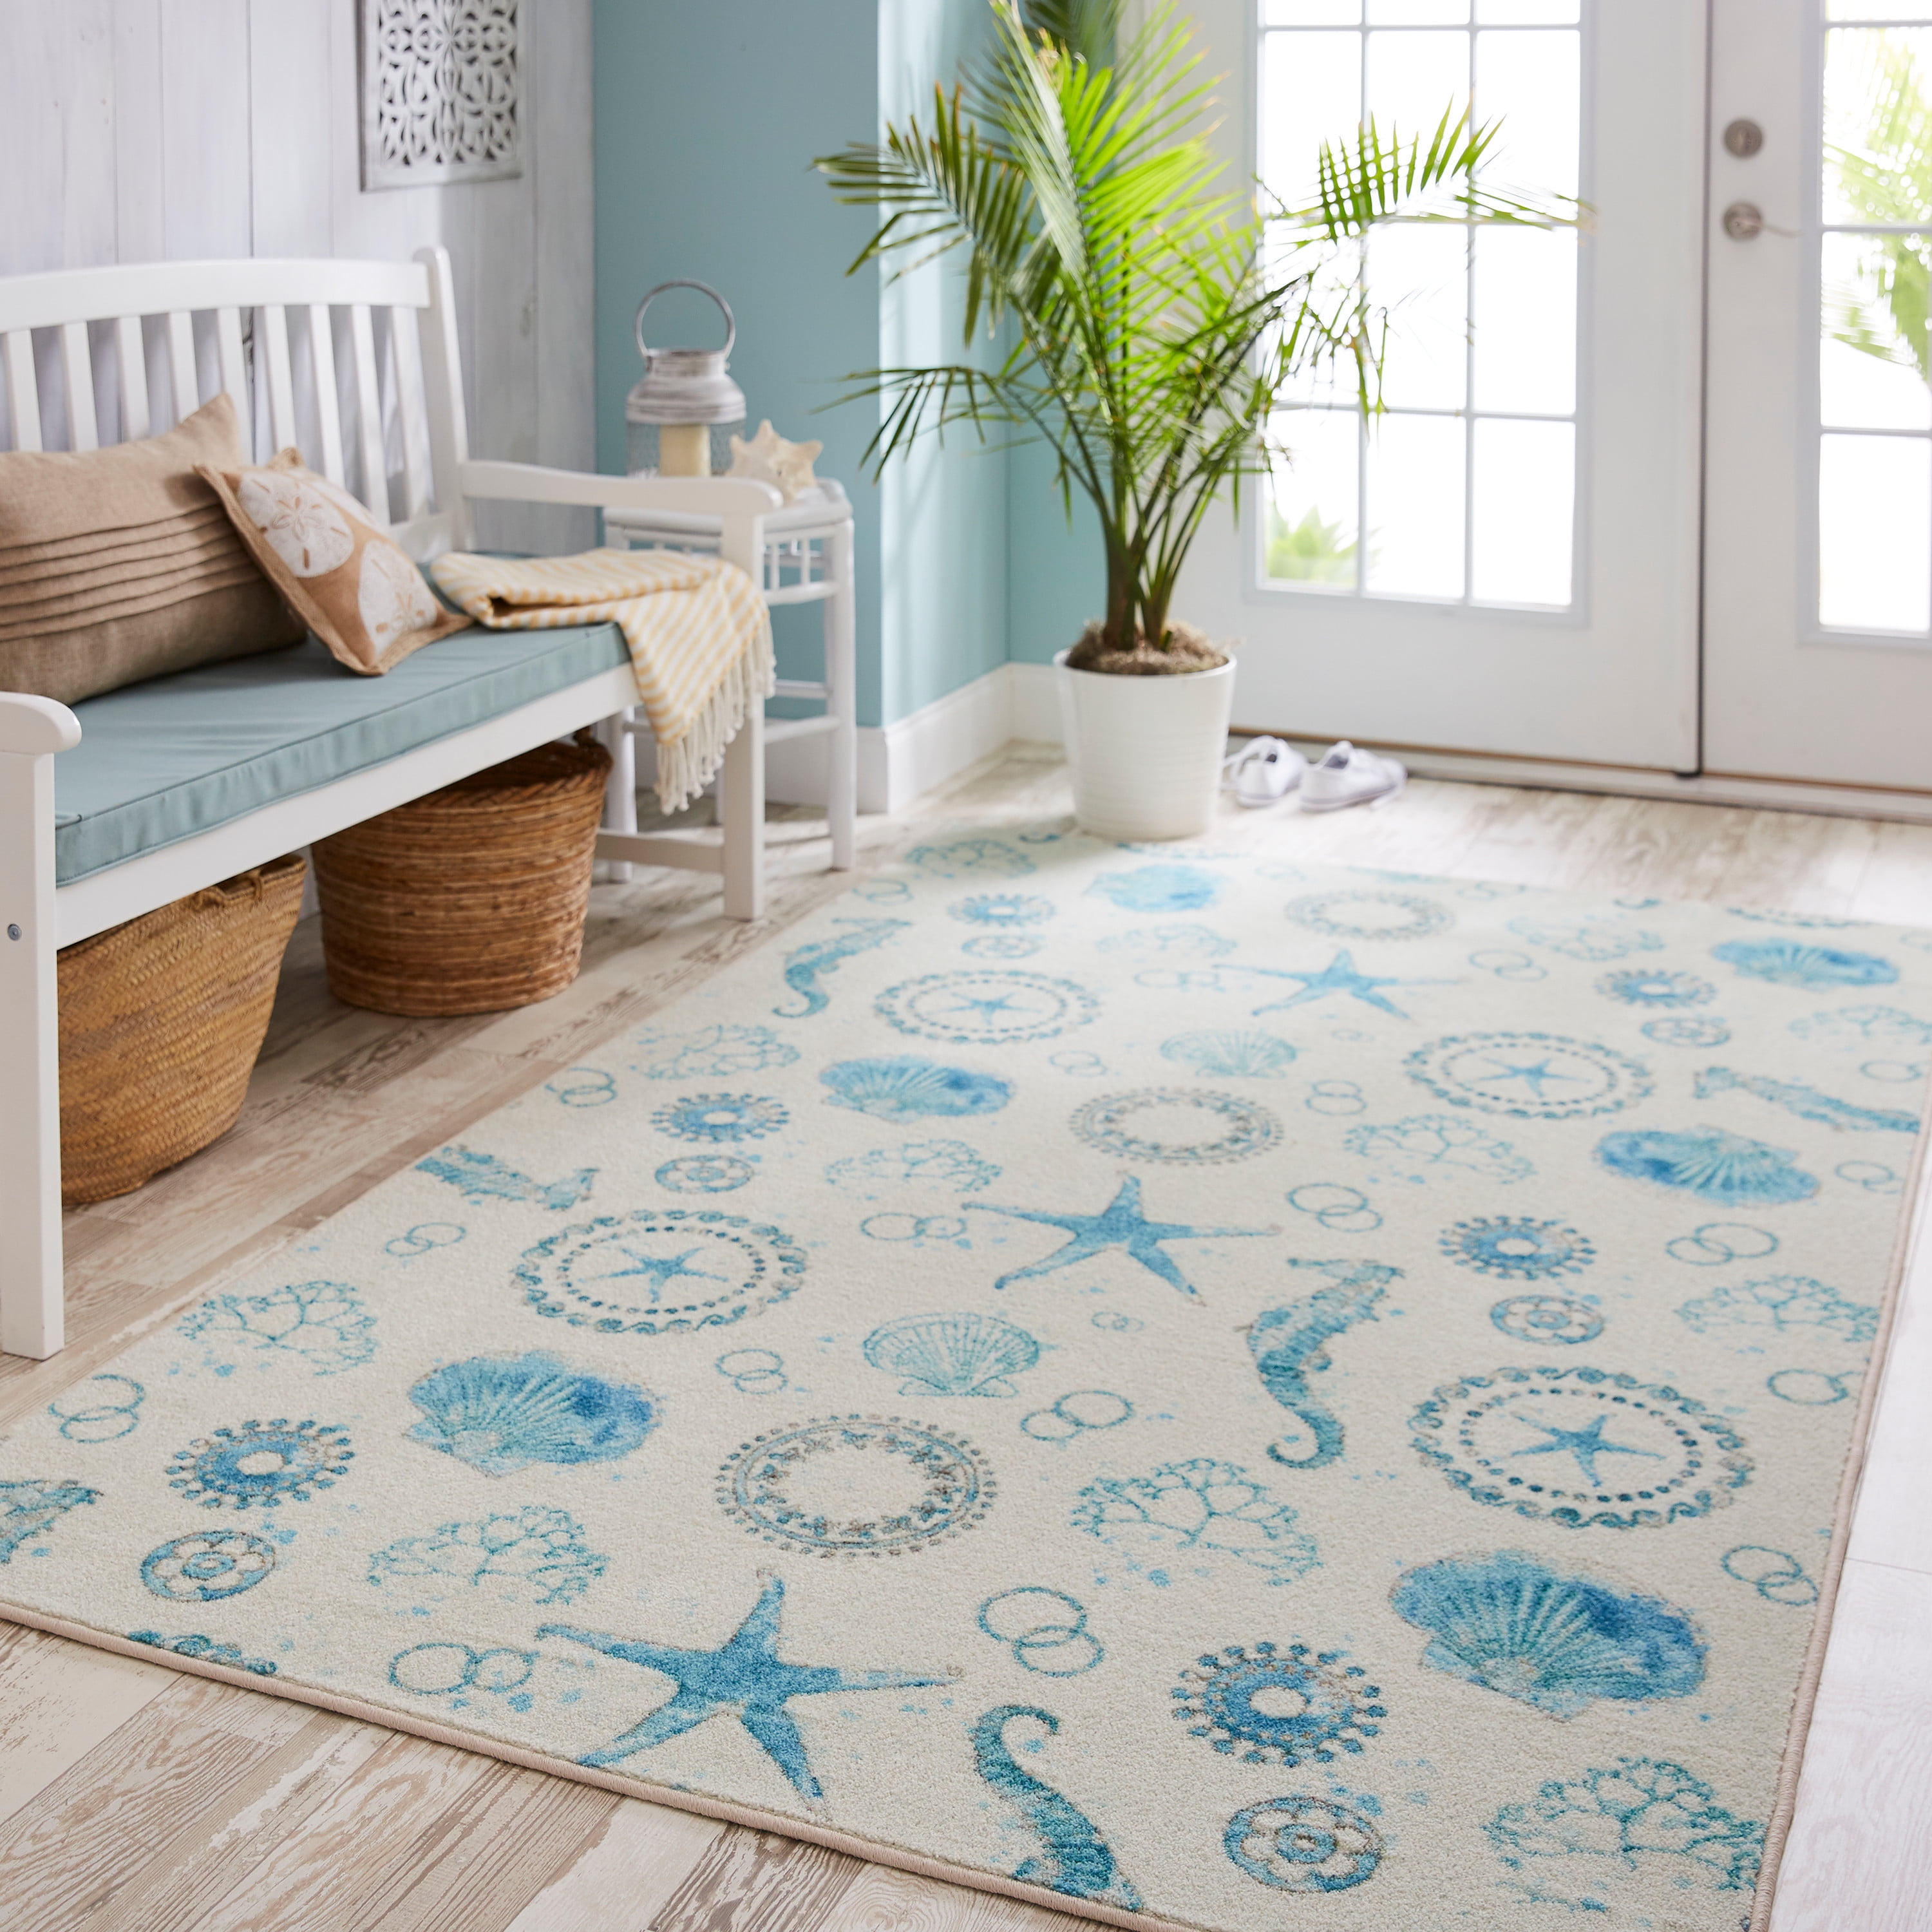 Summer Beach Slippers & Starfish Round Mat Area Rugs Livingroom Bedroom Carpets 